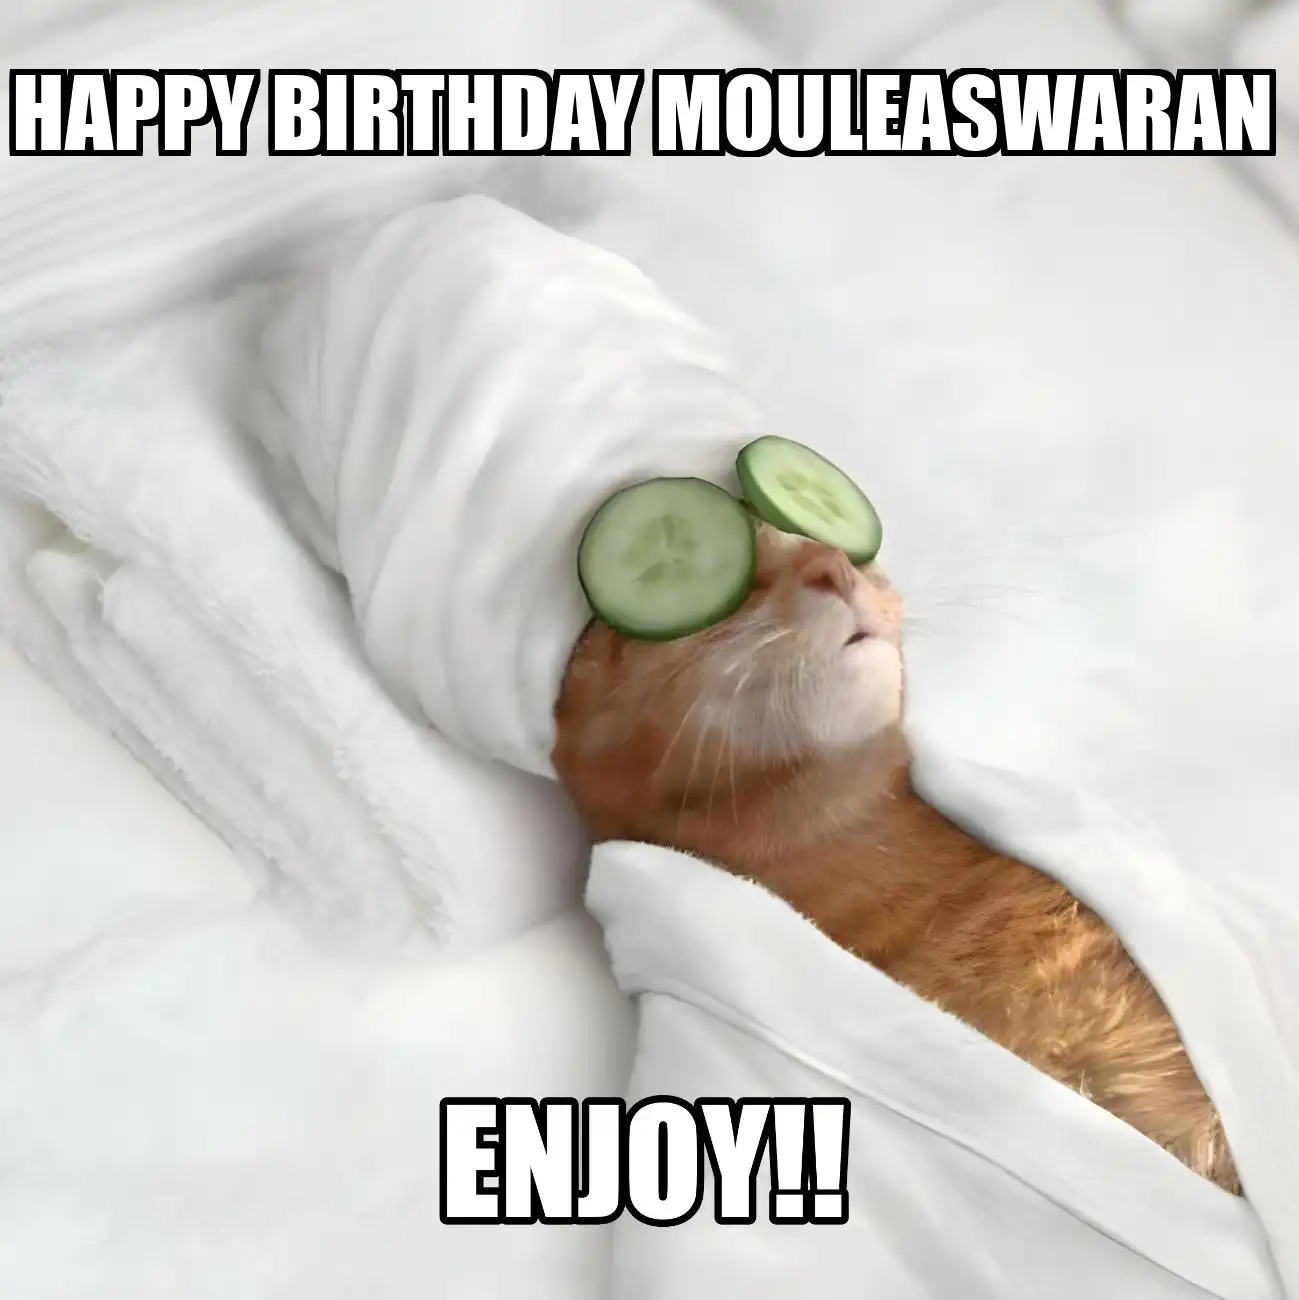 Happy Birthday Mouleaswaran Enjoy Cat Meme